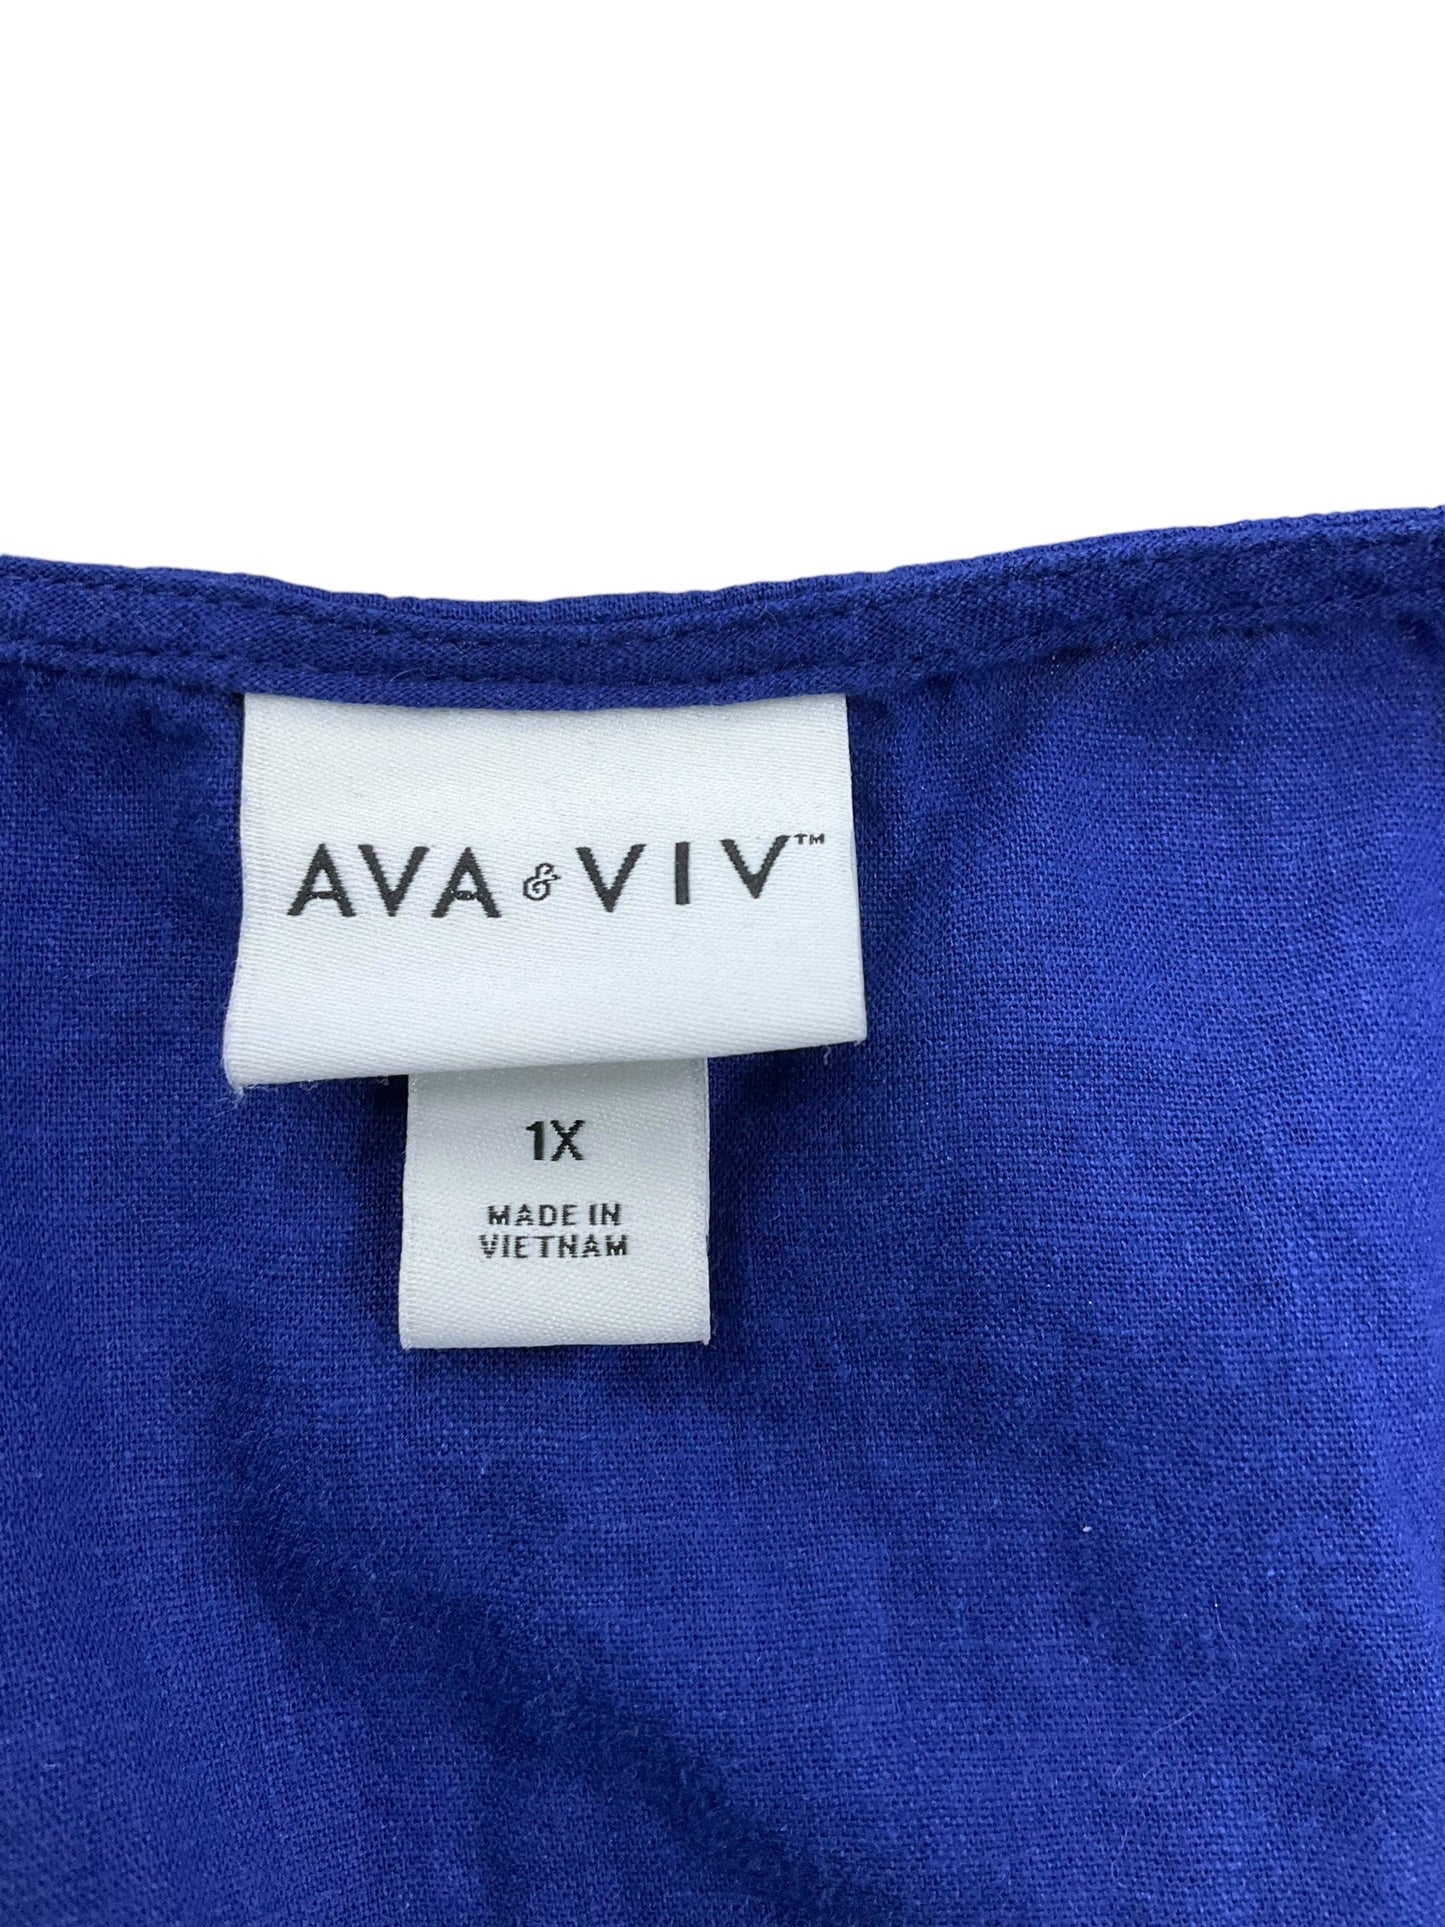 Navy Top 3/4 Sleeve Ava & Viv, Size 1x